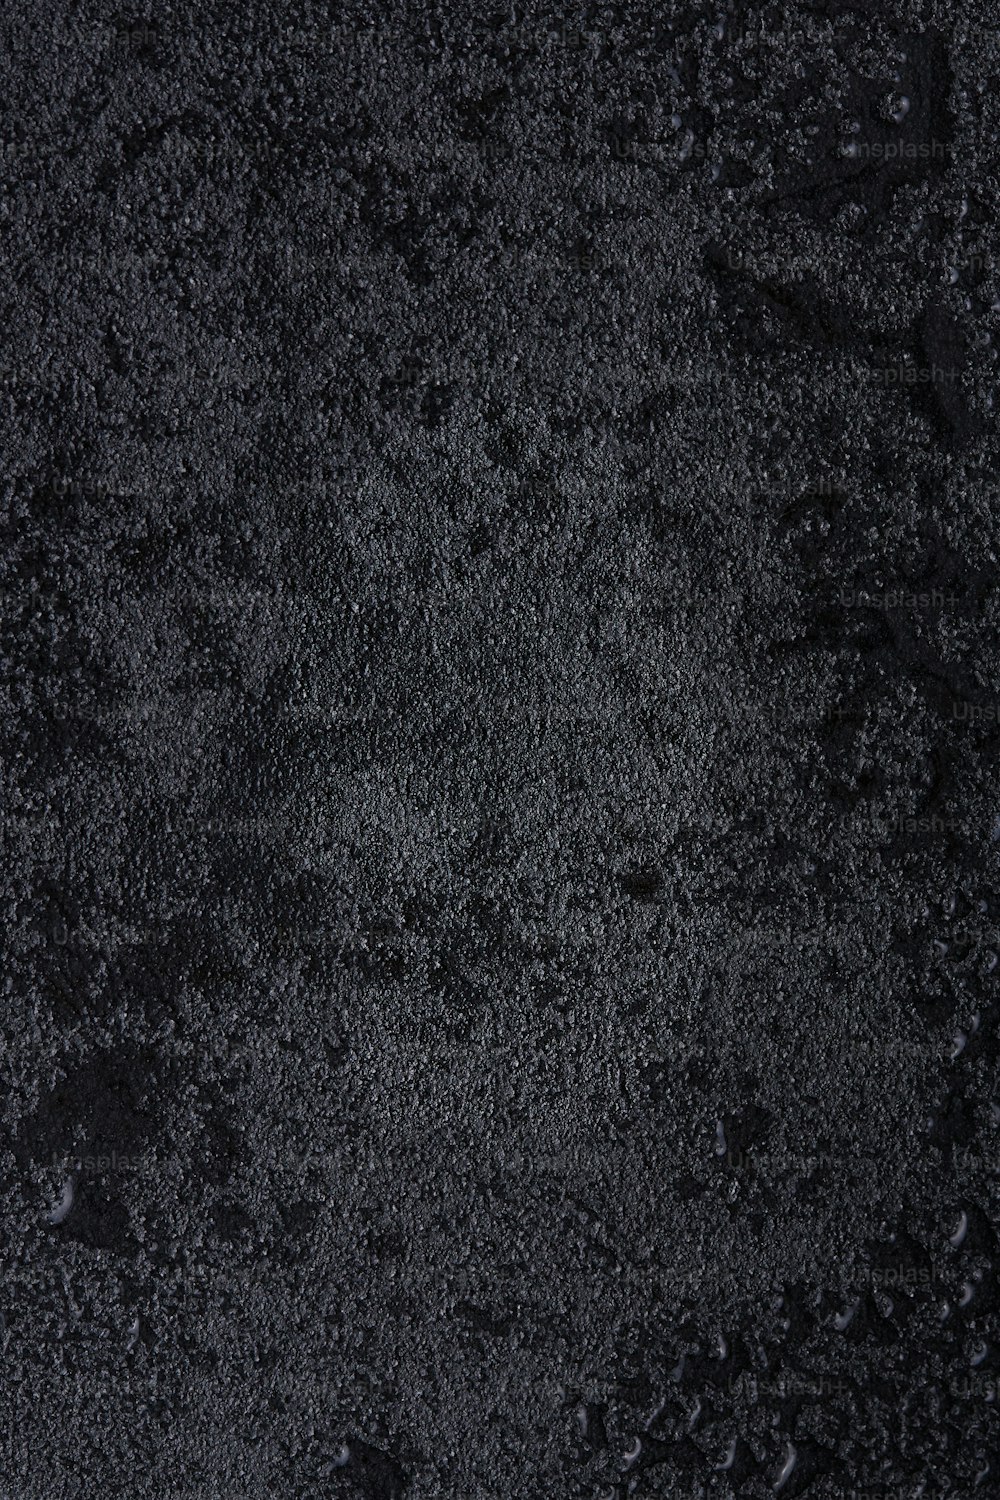 Premium Photo  Black fabric texture background. smooth elegant black silk  can use as wedding background.